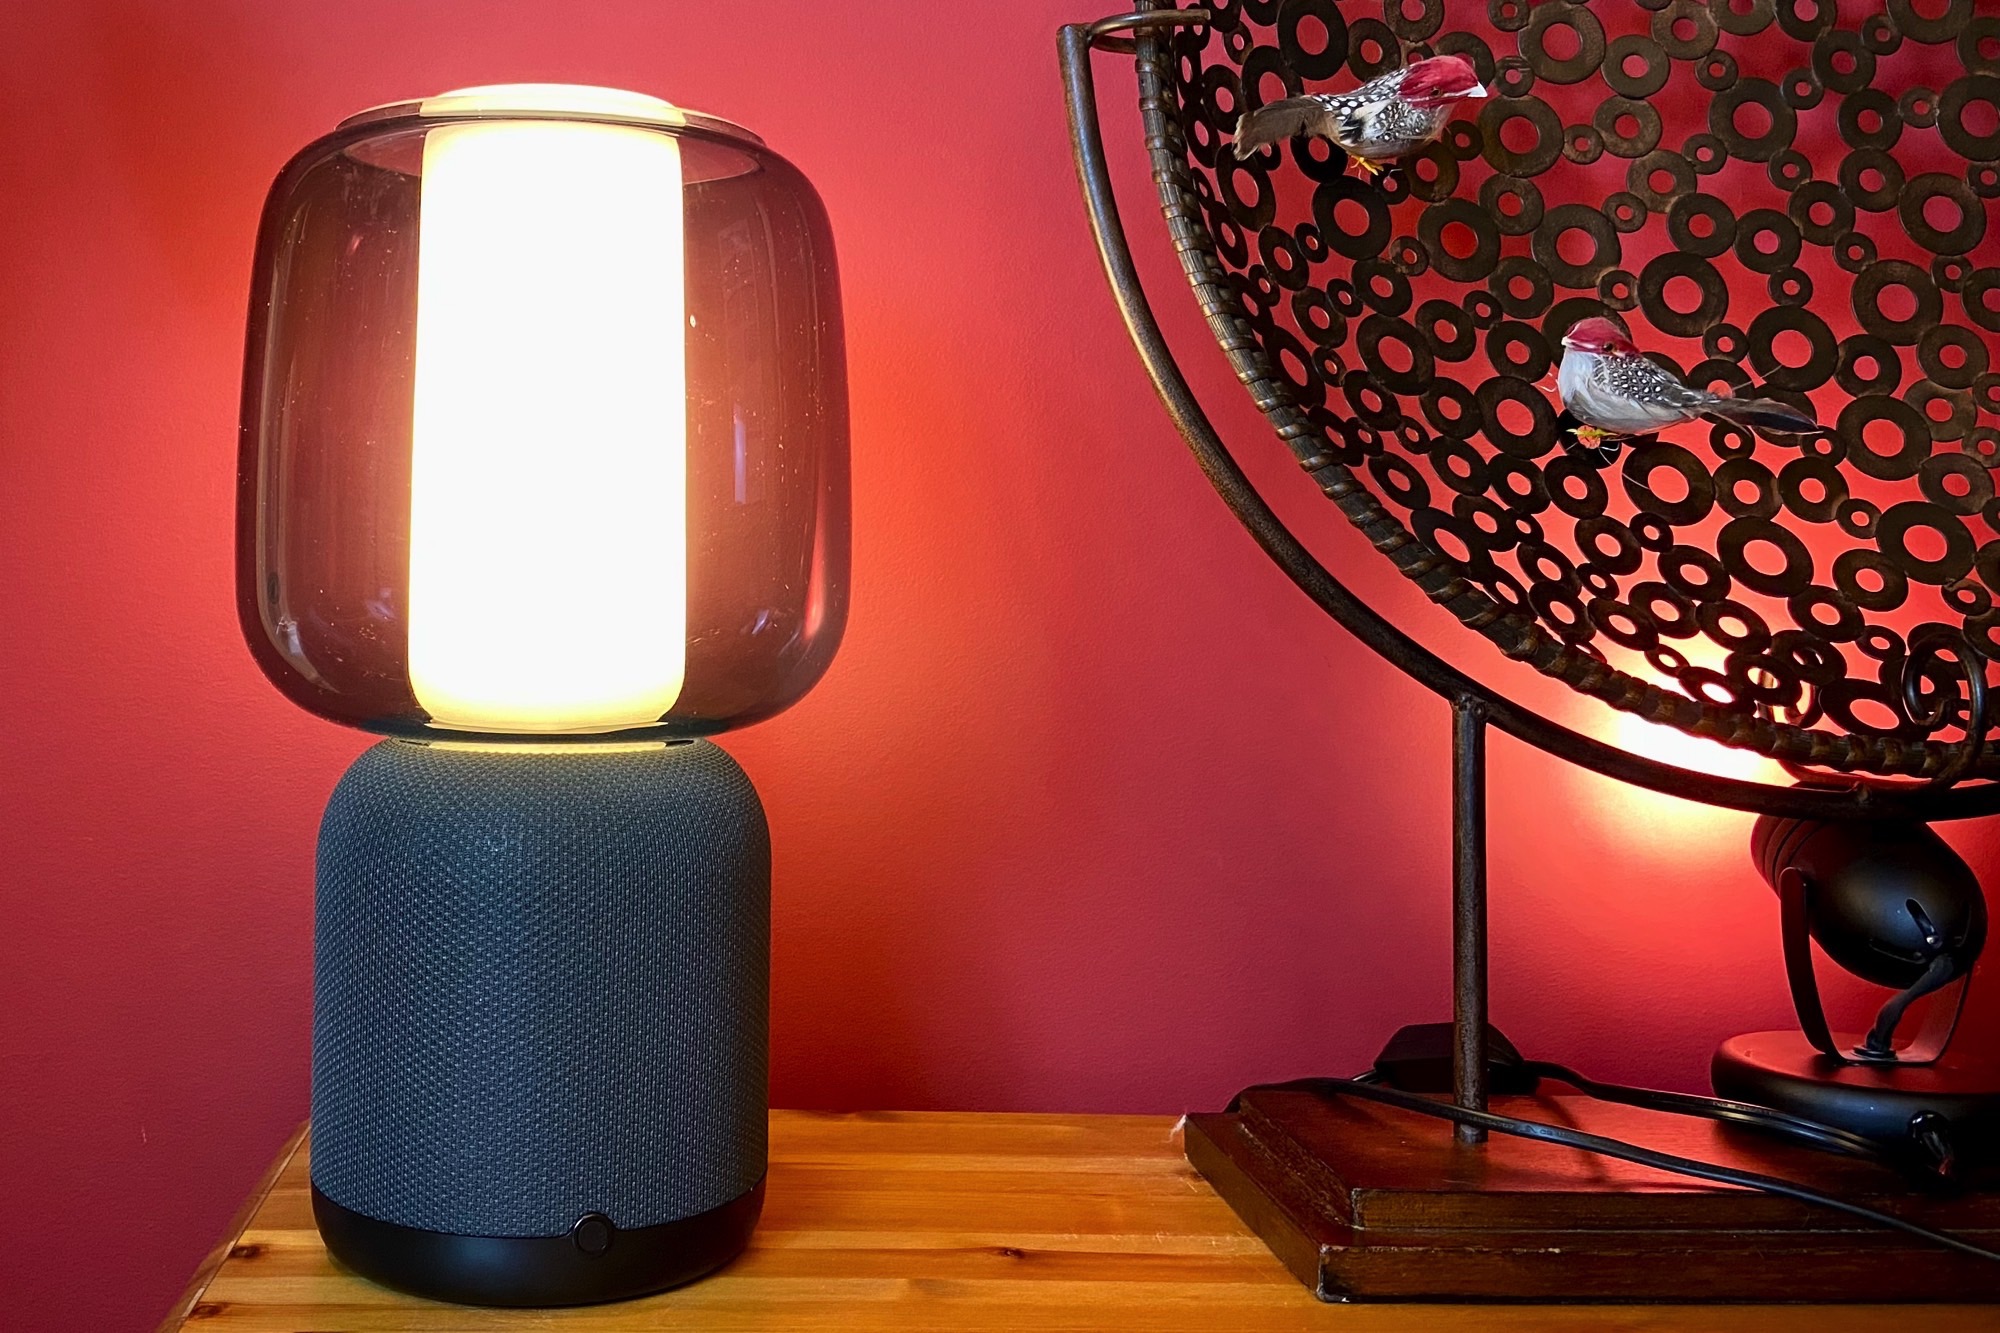 Vertrappen halen Van Ikea Symfonisk Table Lamp Review: More Light, More Sound | Digital Trends